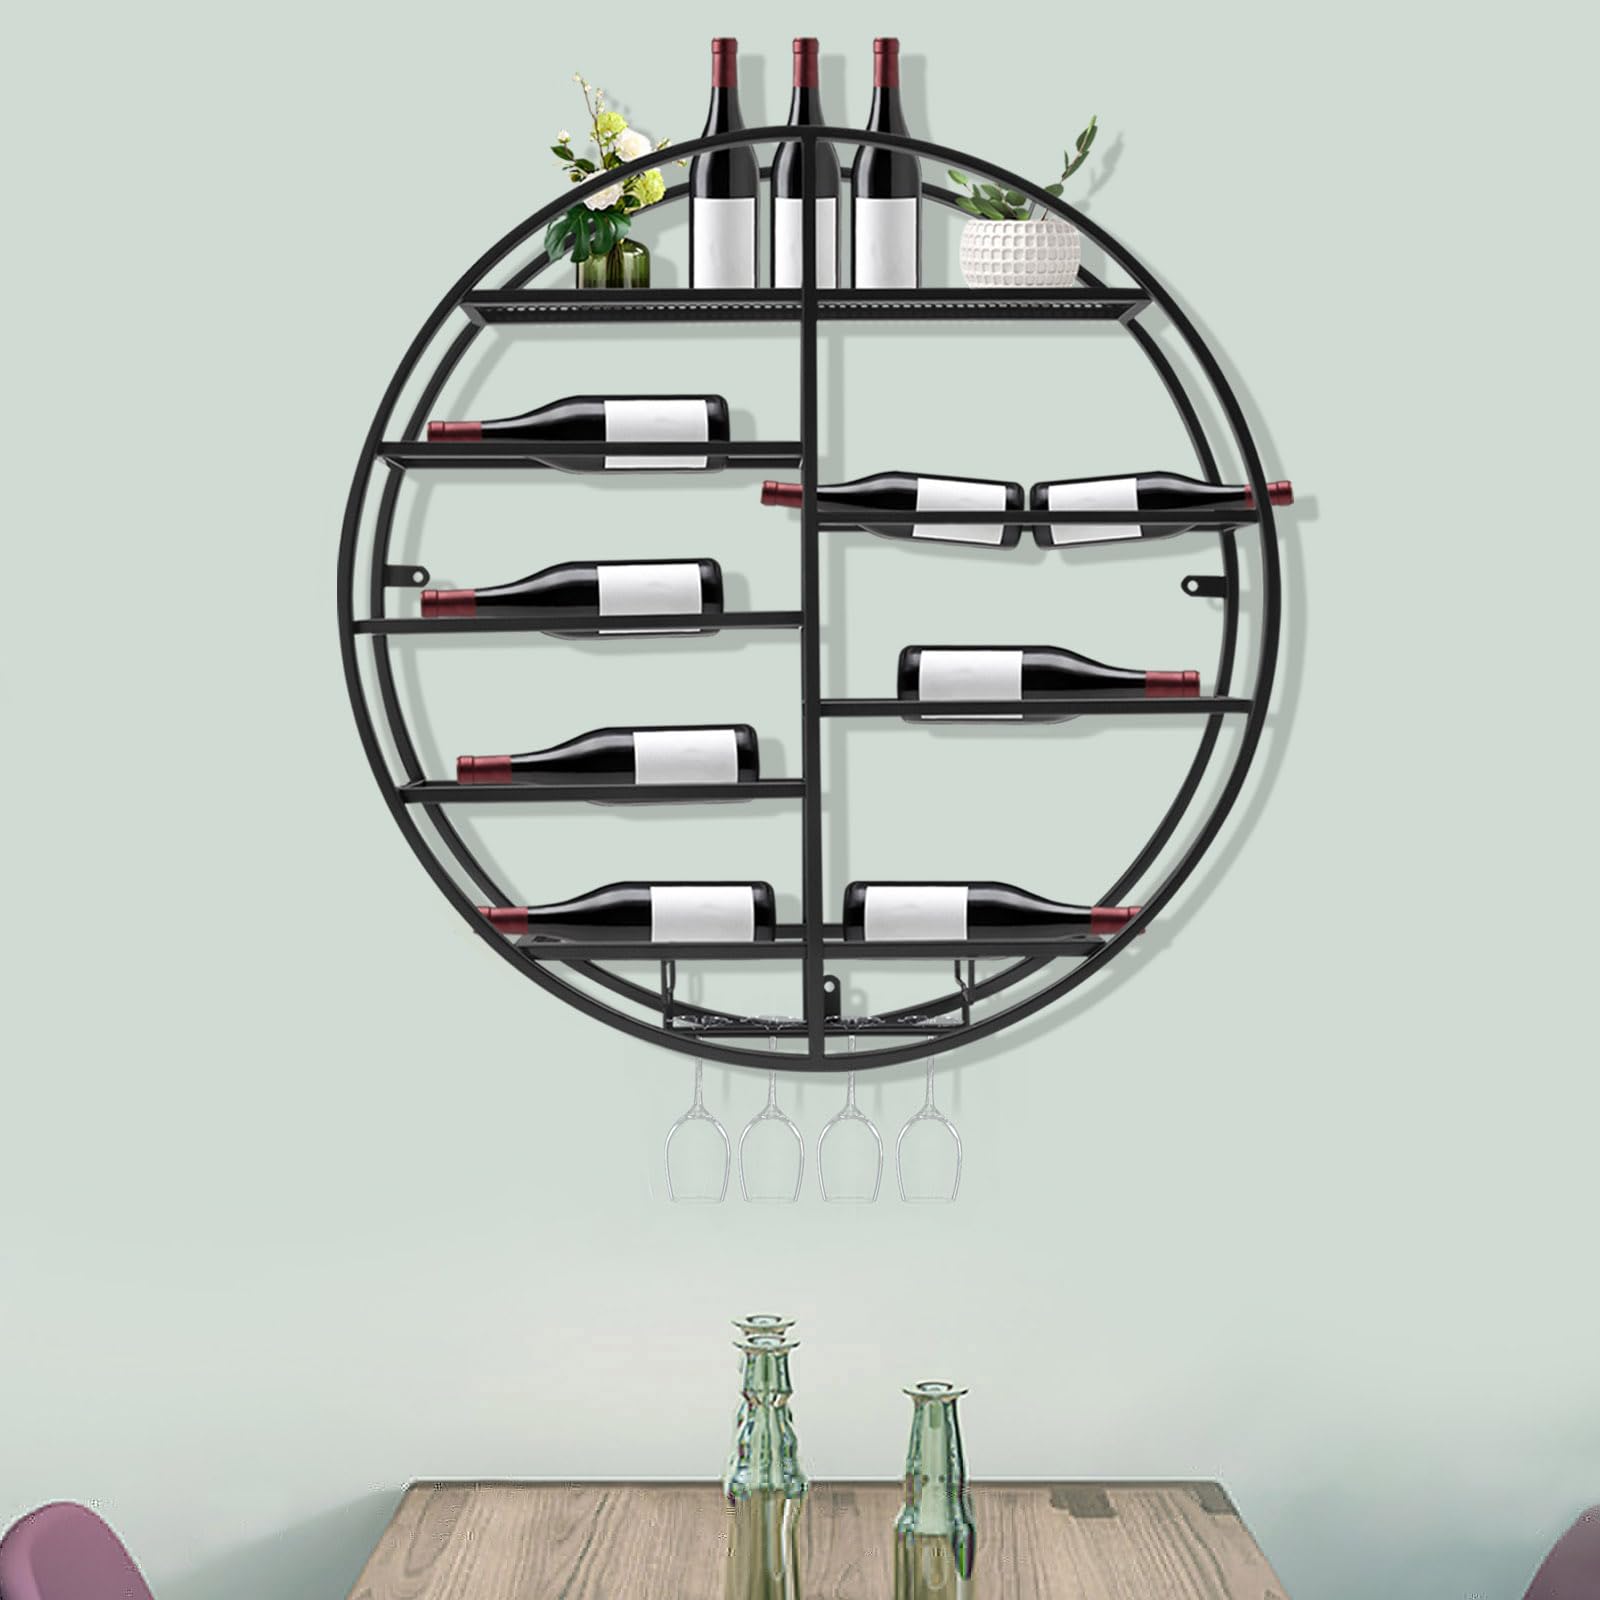 Headery Modern 23.6inch Mental Wall Mounted Wine Rack,5 Tier Stackable Wine Holder, Round Wine Glass Shelf Goblet Holder for Bar Wine Cellar Kitchen Storage Display (Gold/Black) (Black)